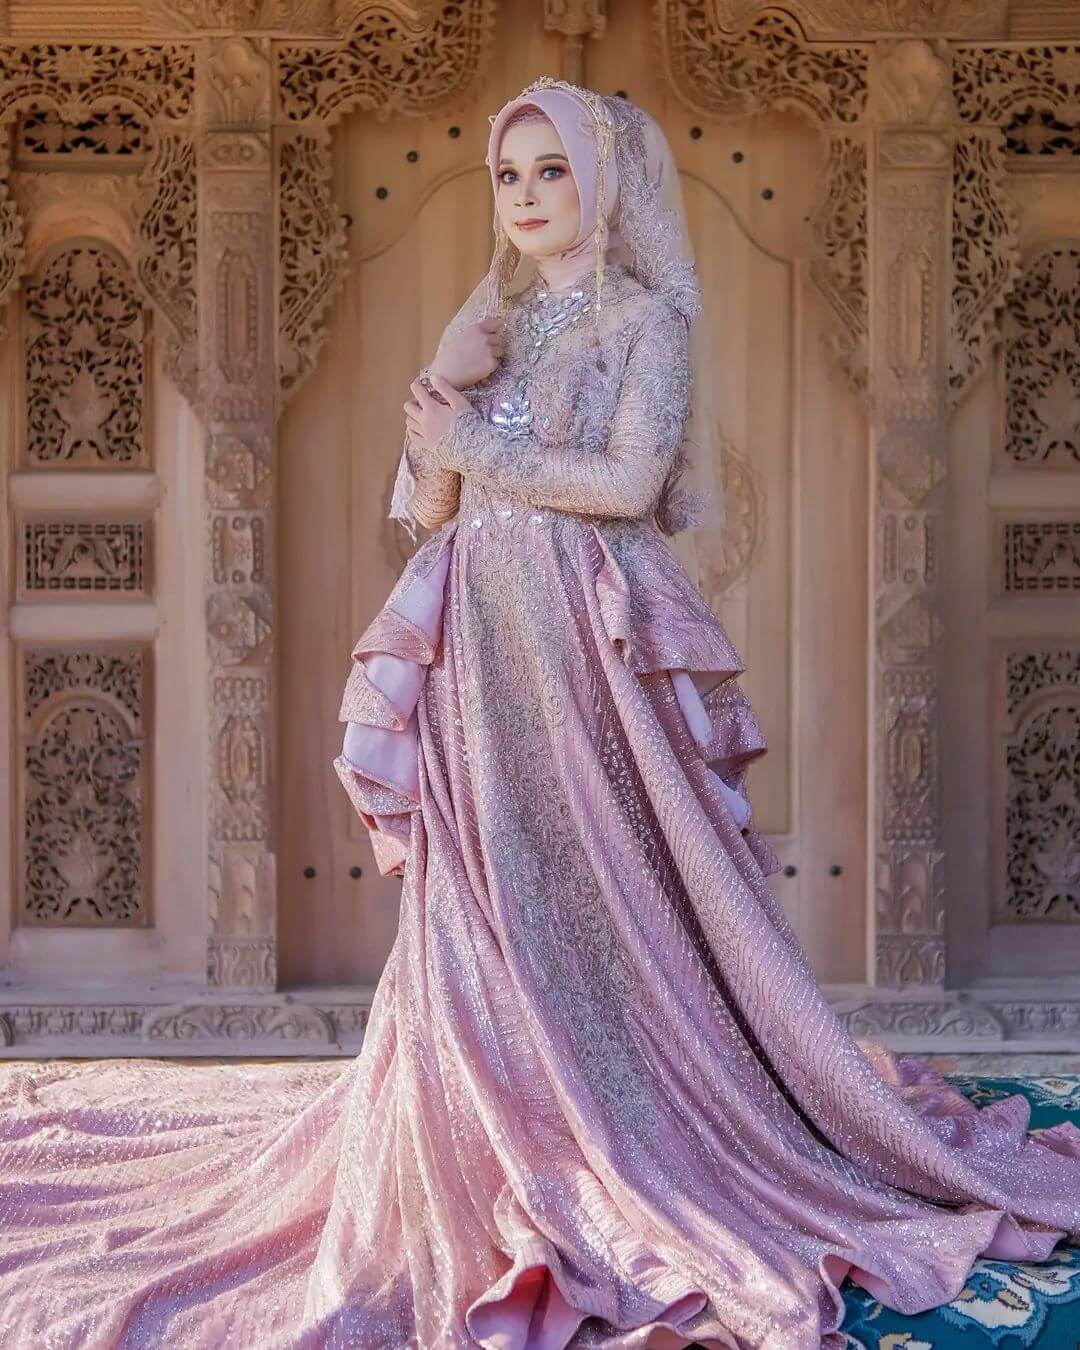 Some Modern and Fashionable Hijab Wedding Dress Ideas 2021 Pink Embellished Hijab - Long Wedding Dress With Ruffles